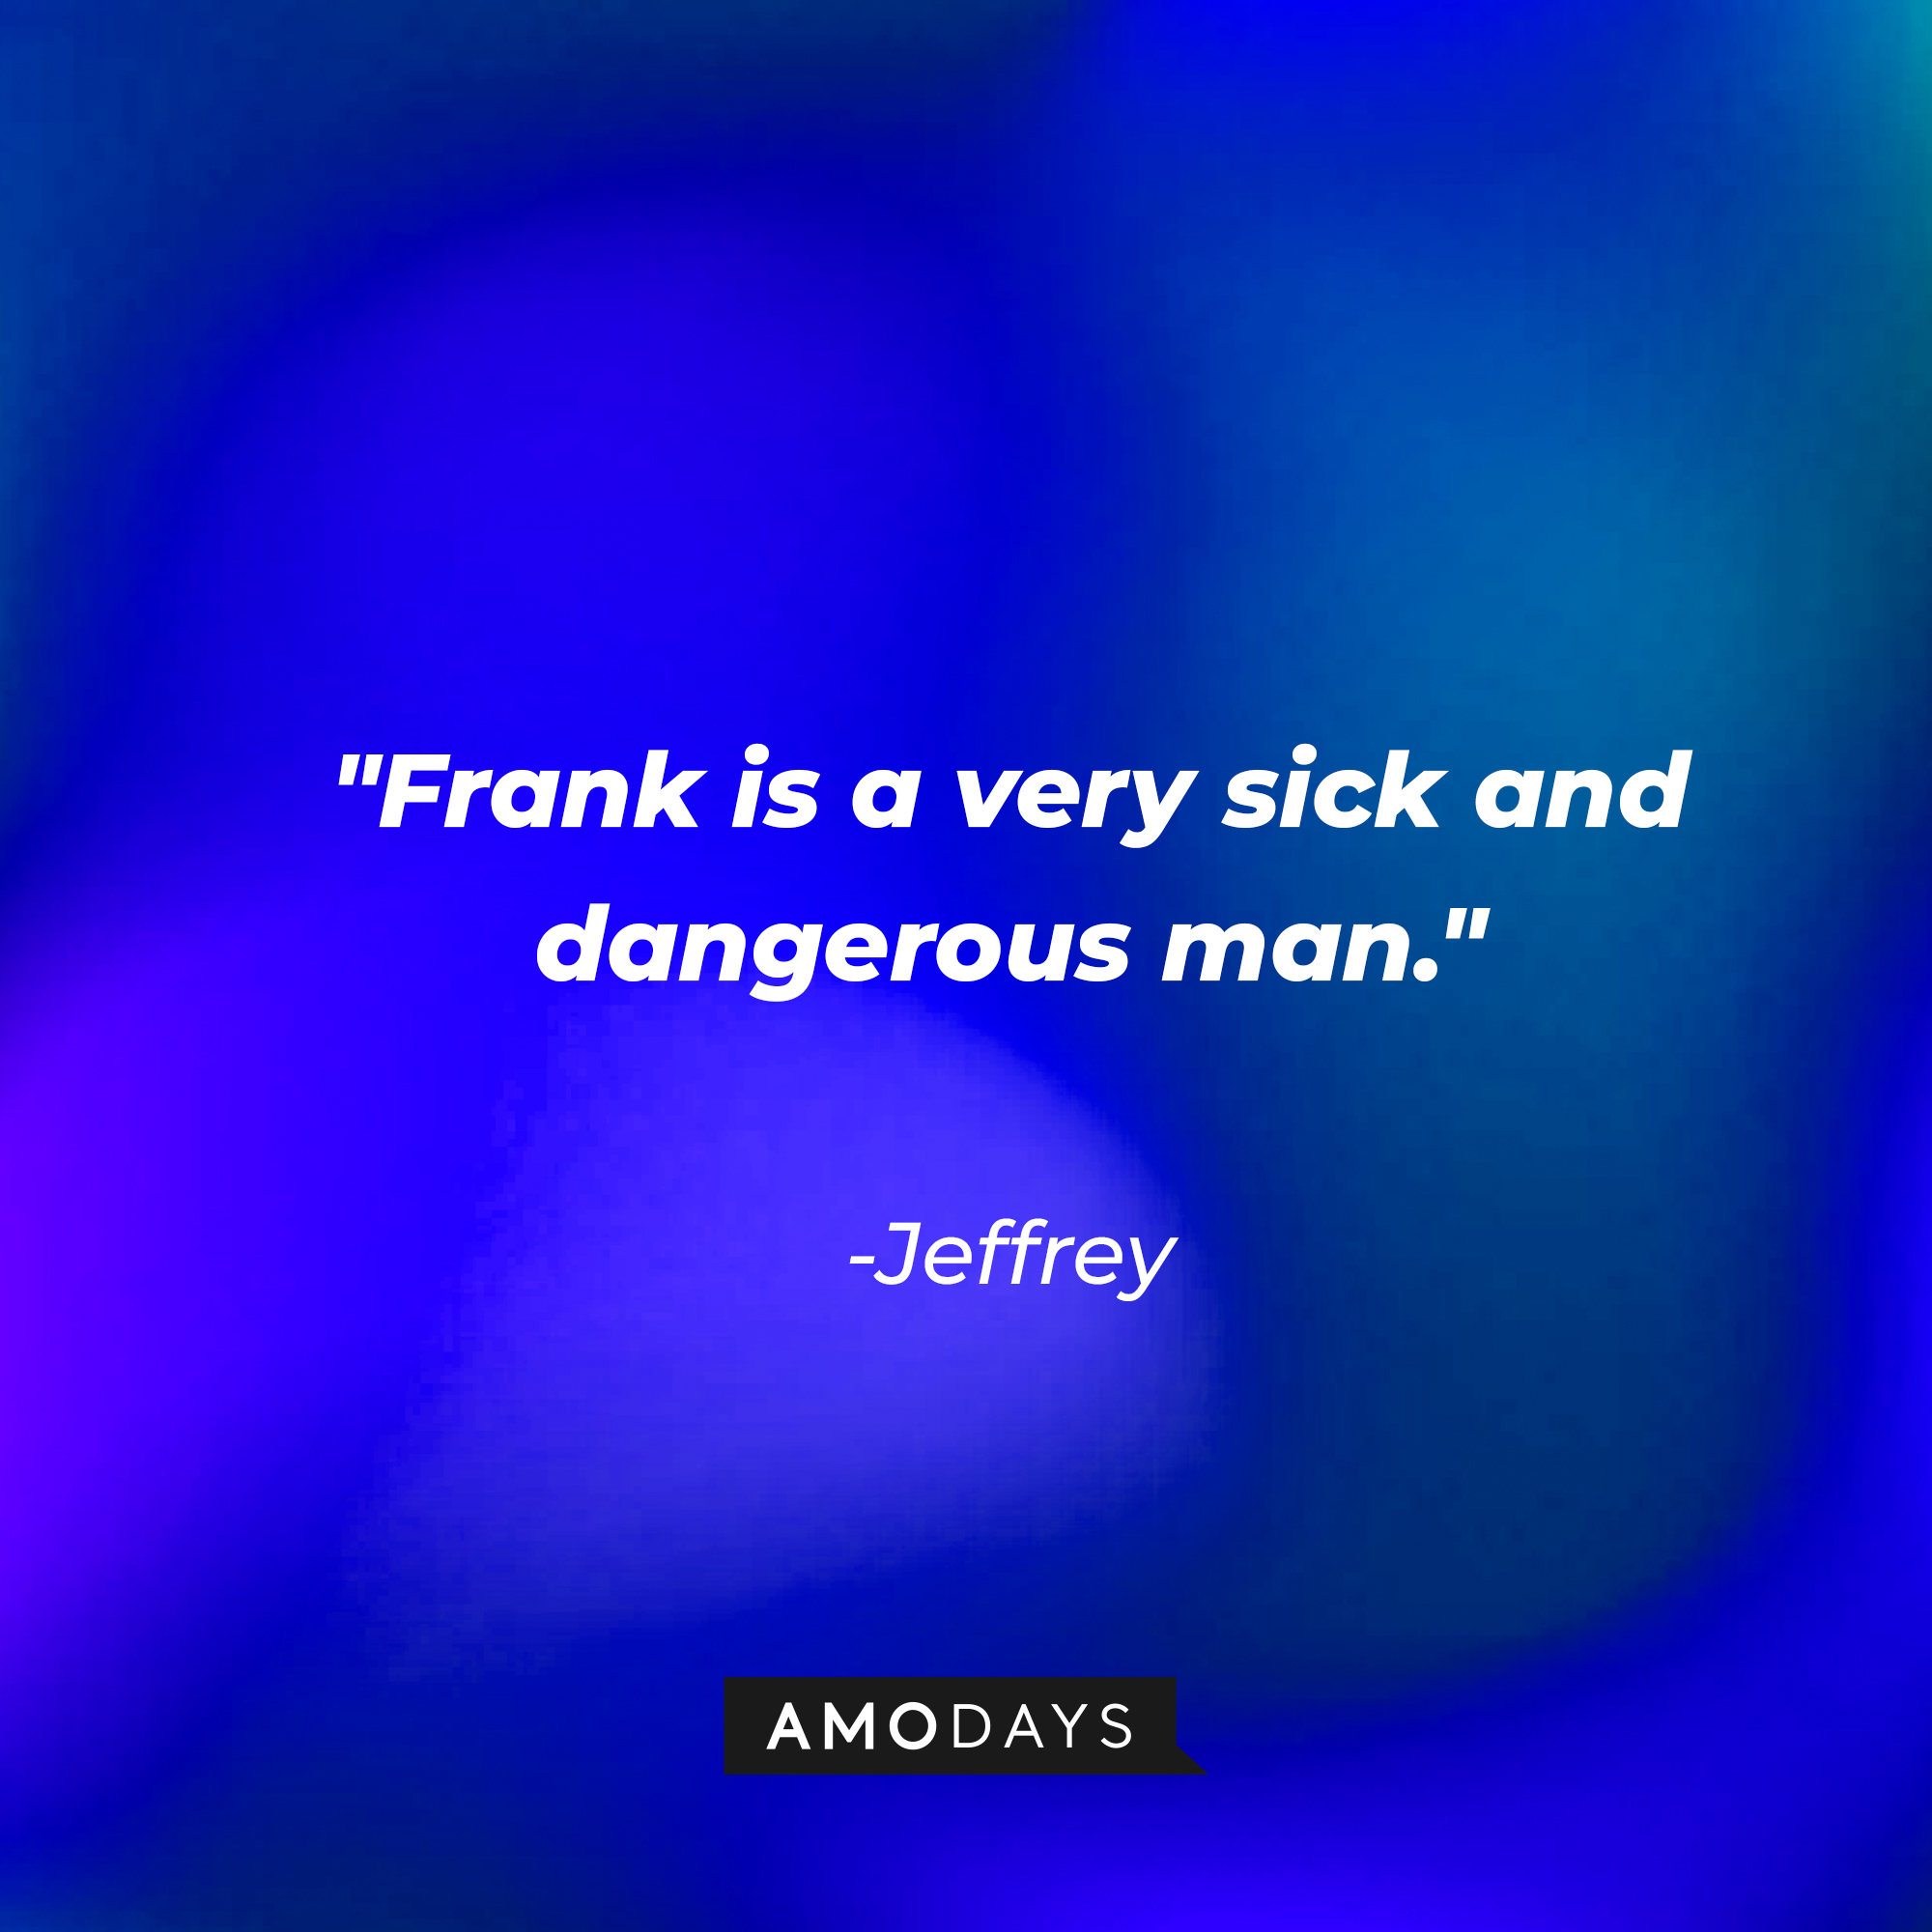 Jeffrey's quote: "Frank is a very sick and dangerous man." | Source: facebook.com/BlueVelvetMovie